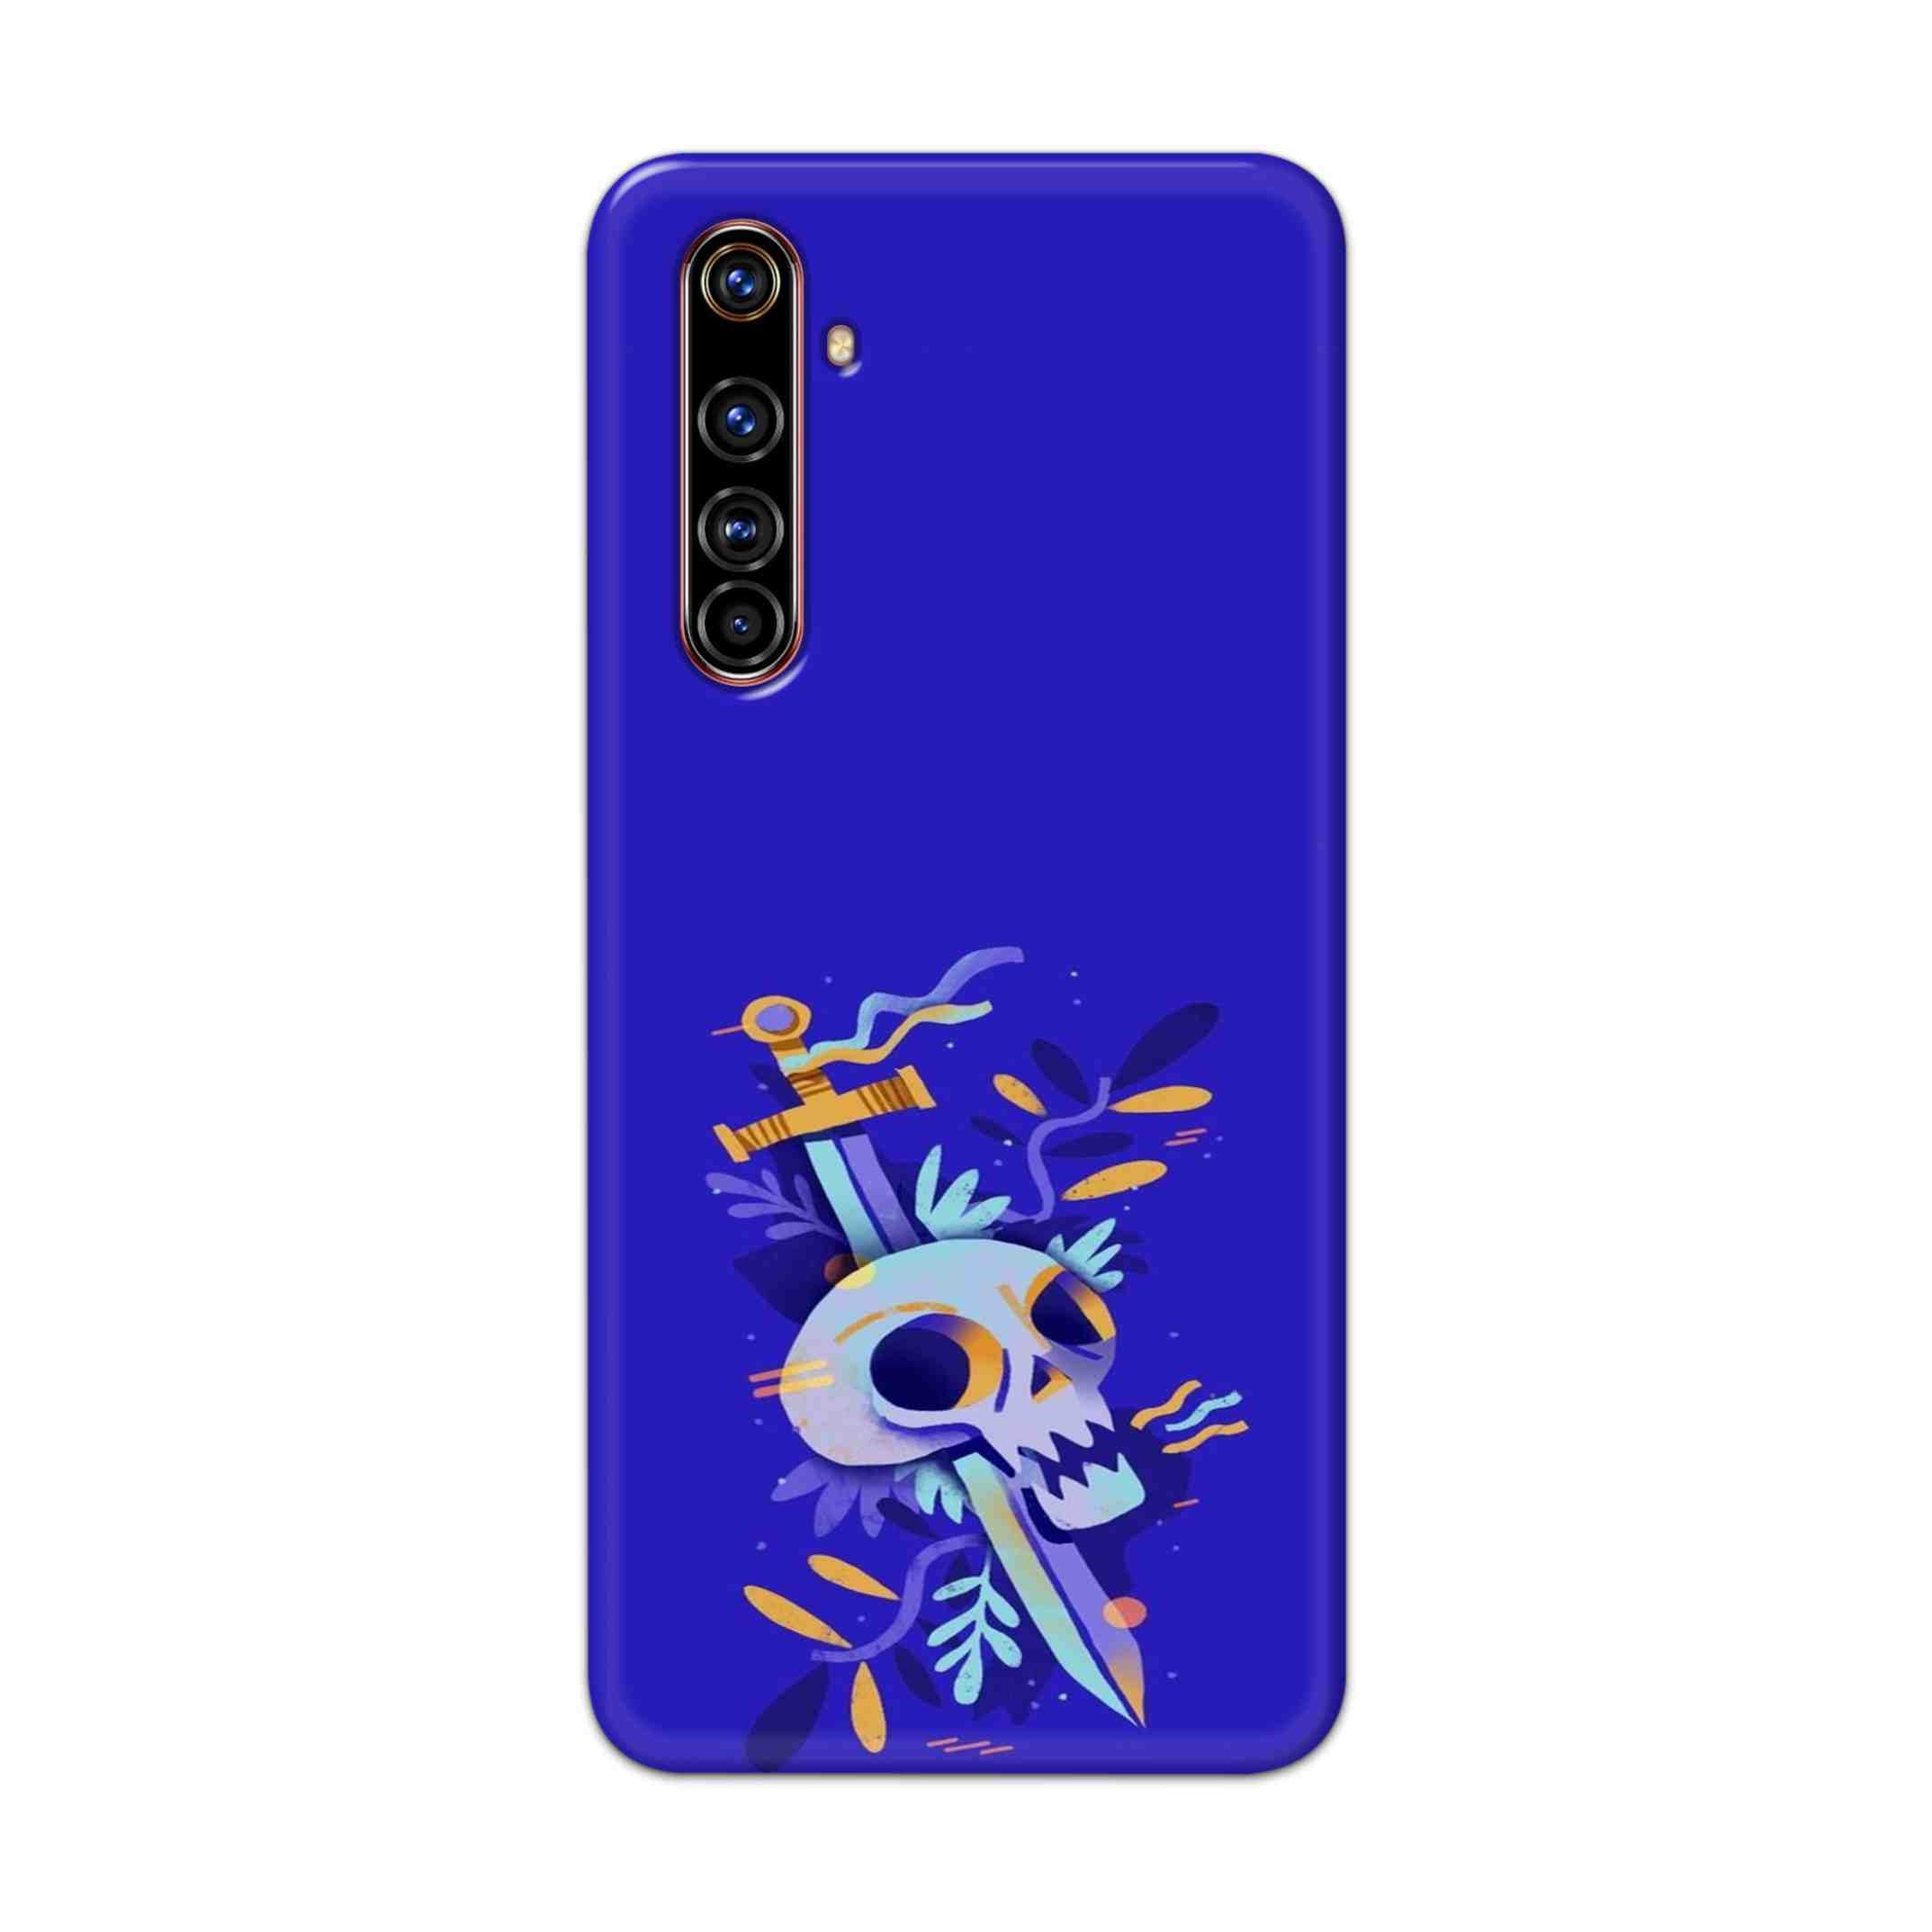 Buy Blue Skull Hard Back Mobile Phone Case Cover For Realme X50 Pro Online